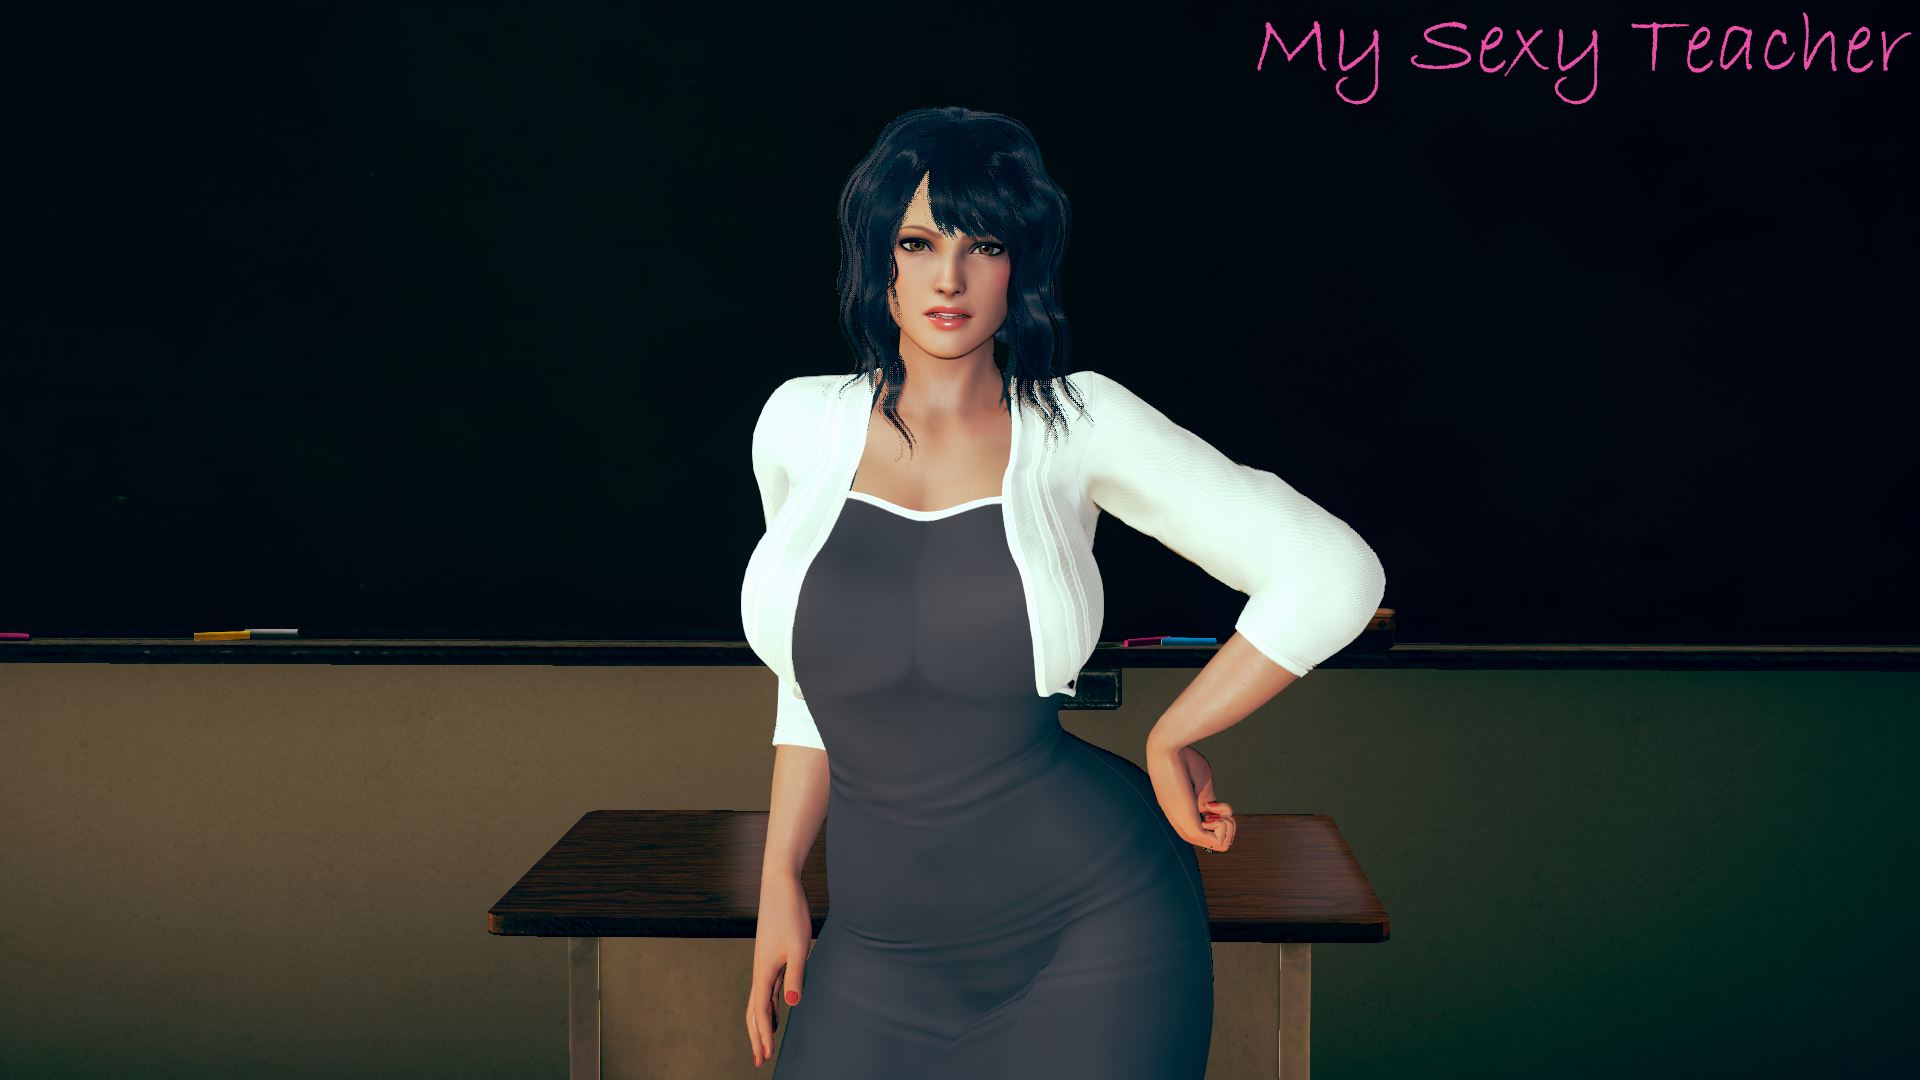 Download Sexy Teacher Full Hd Download - Ren'Py] My Sexy Teacher - v0.05 by Sitayo 18+ Adult xxx Porn Game Download